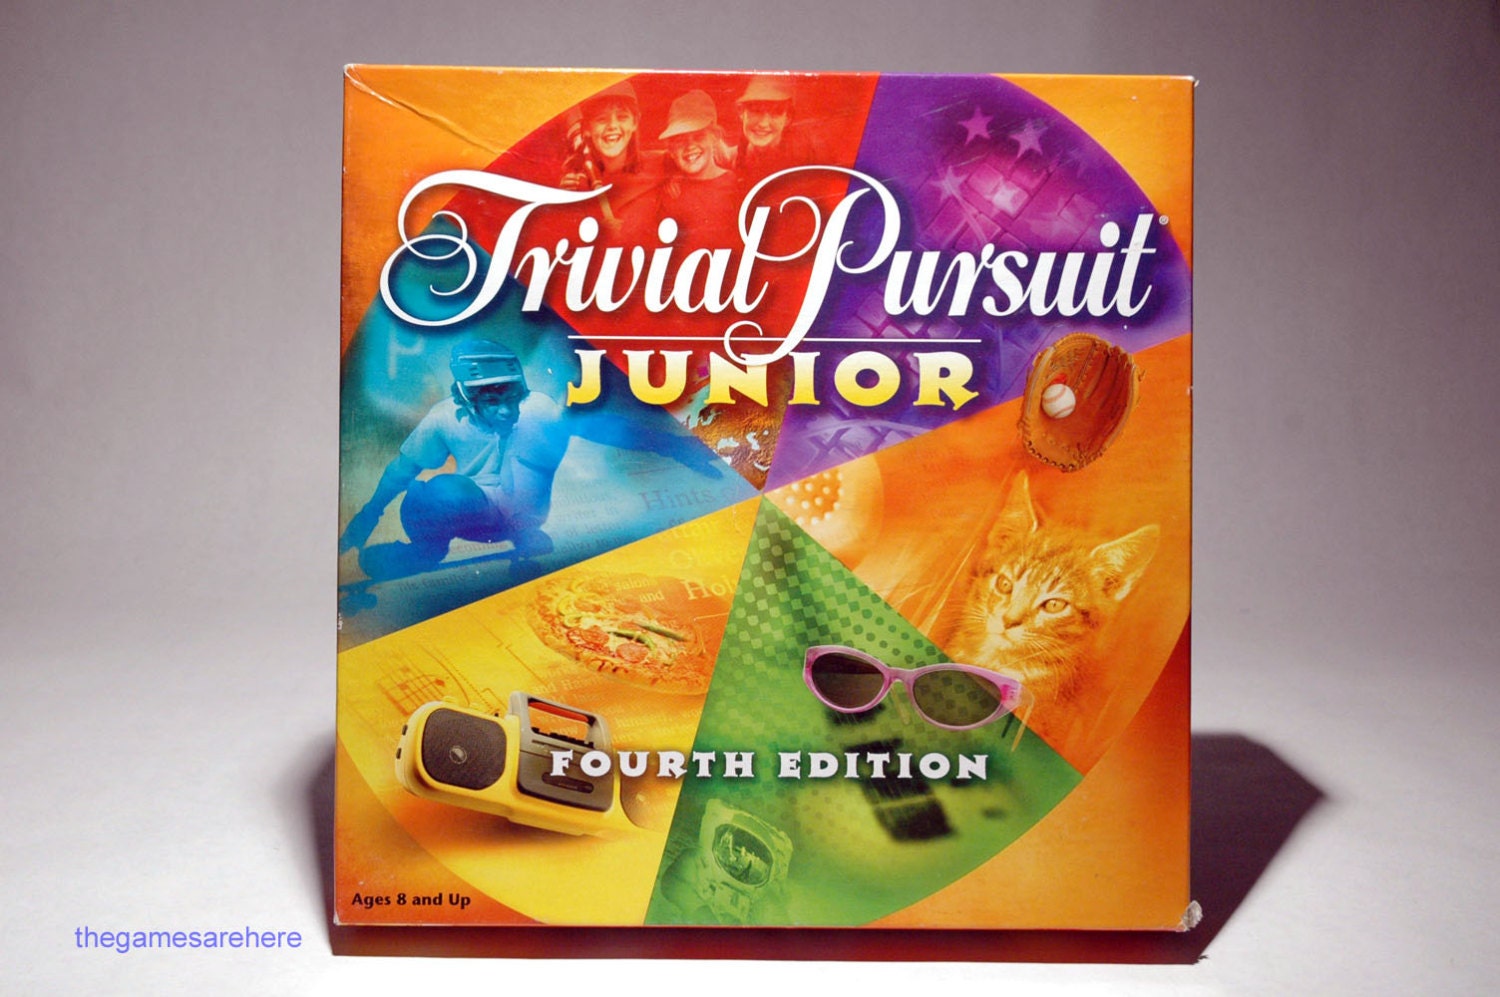 Trivial Pursuit Junior Fourth Edition